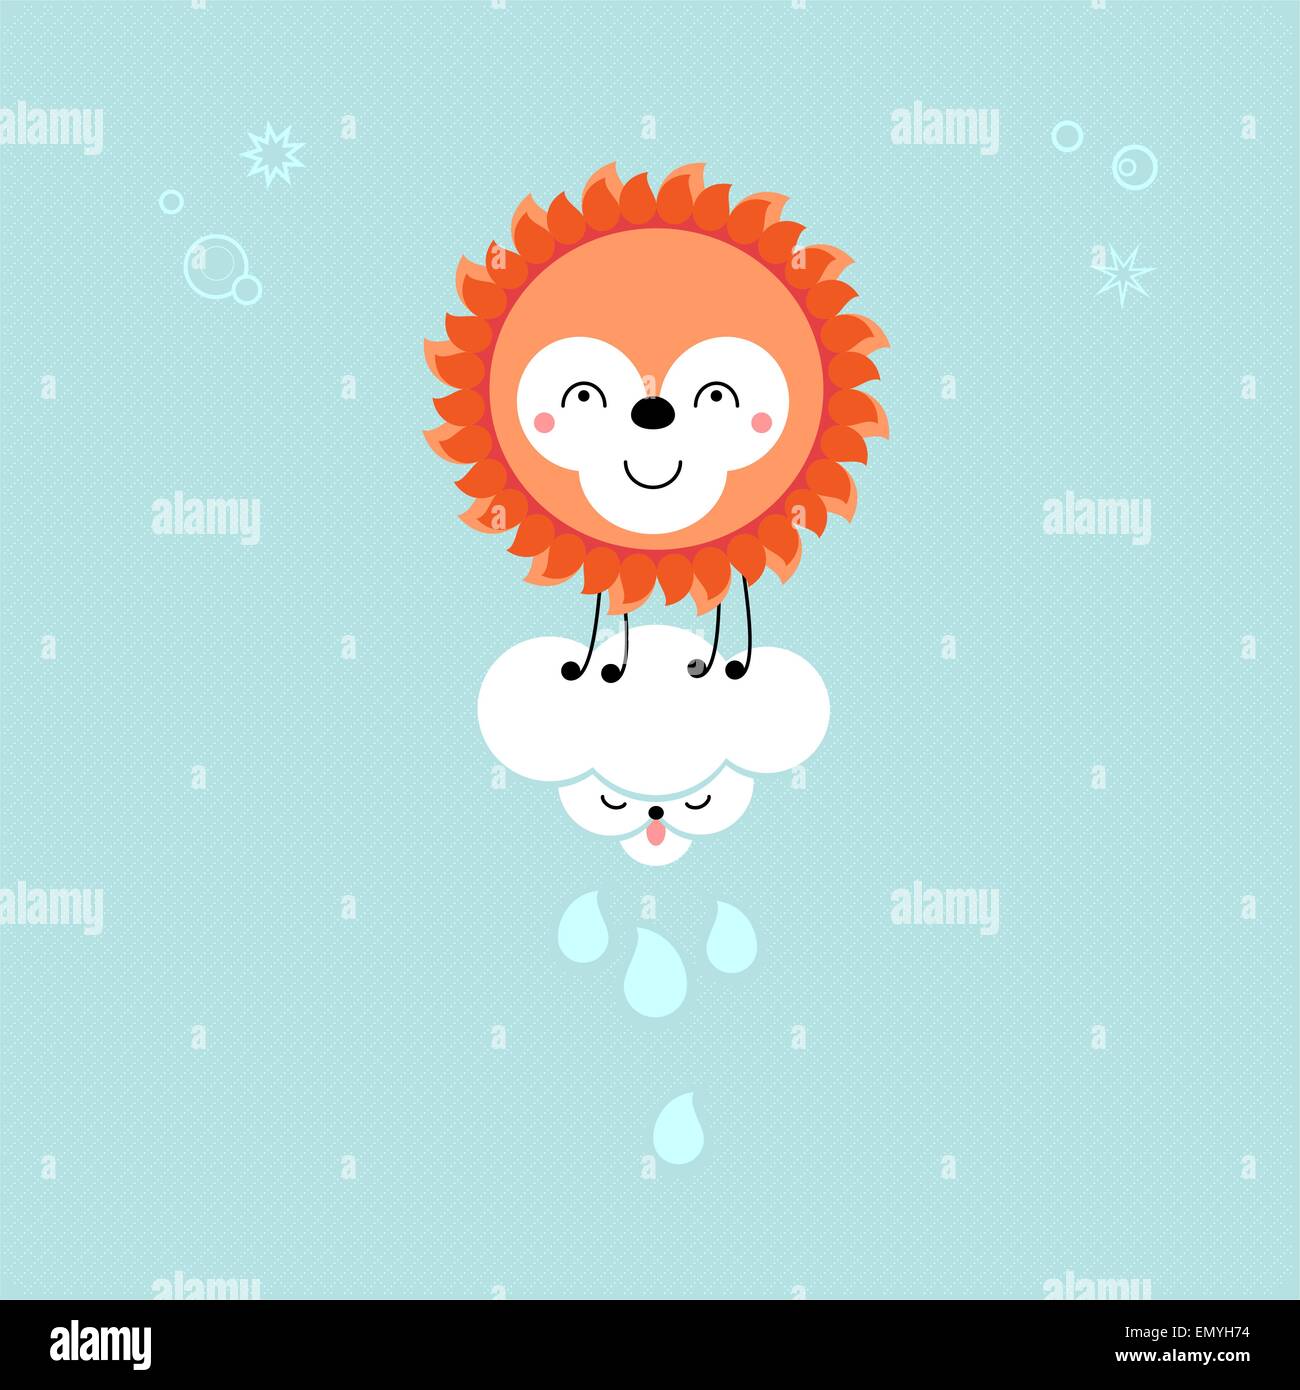 Sun and Cloud in the sky. Cute kawaii animalistic cartoon characters Stock Vector